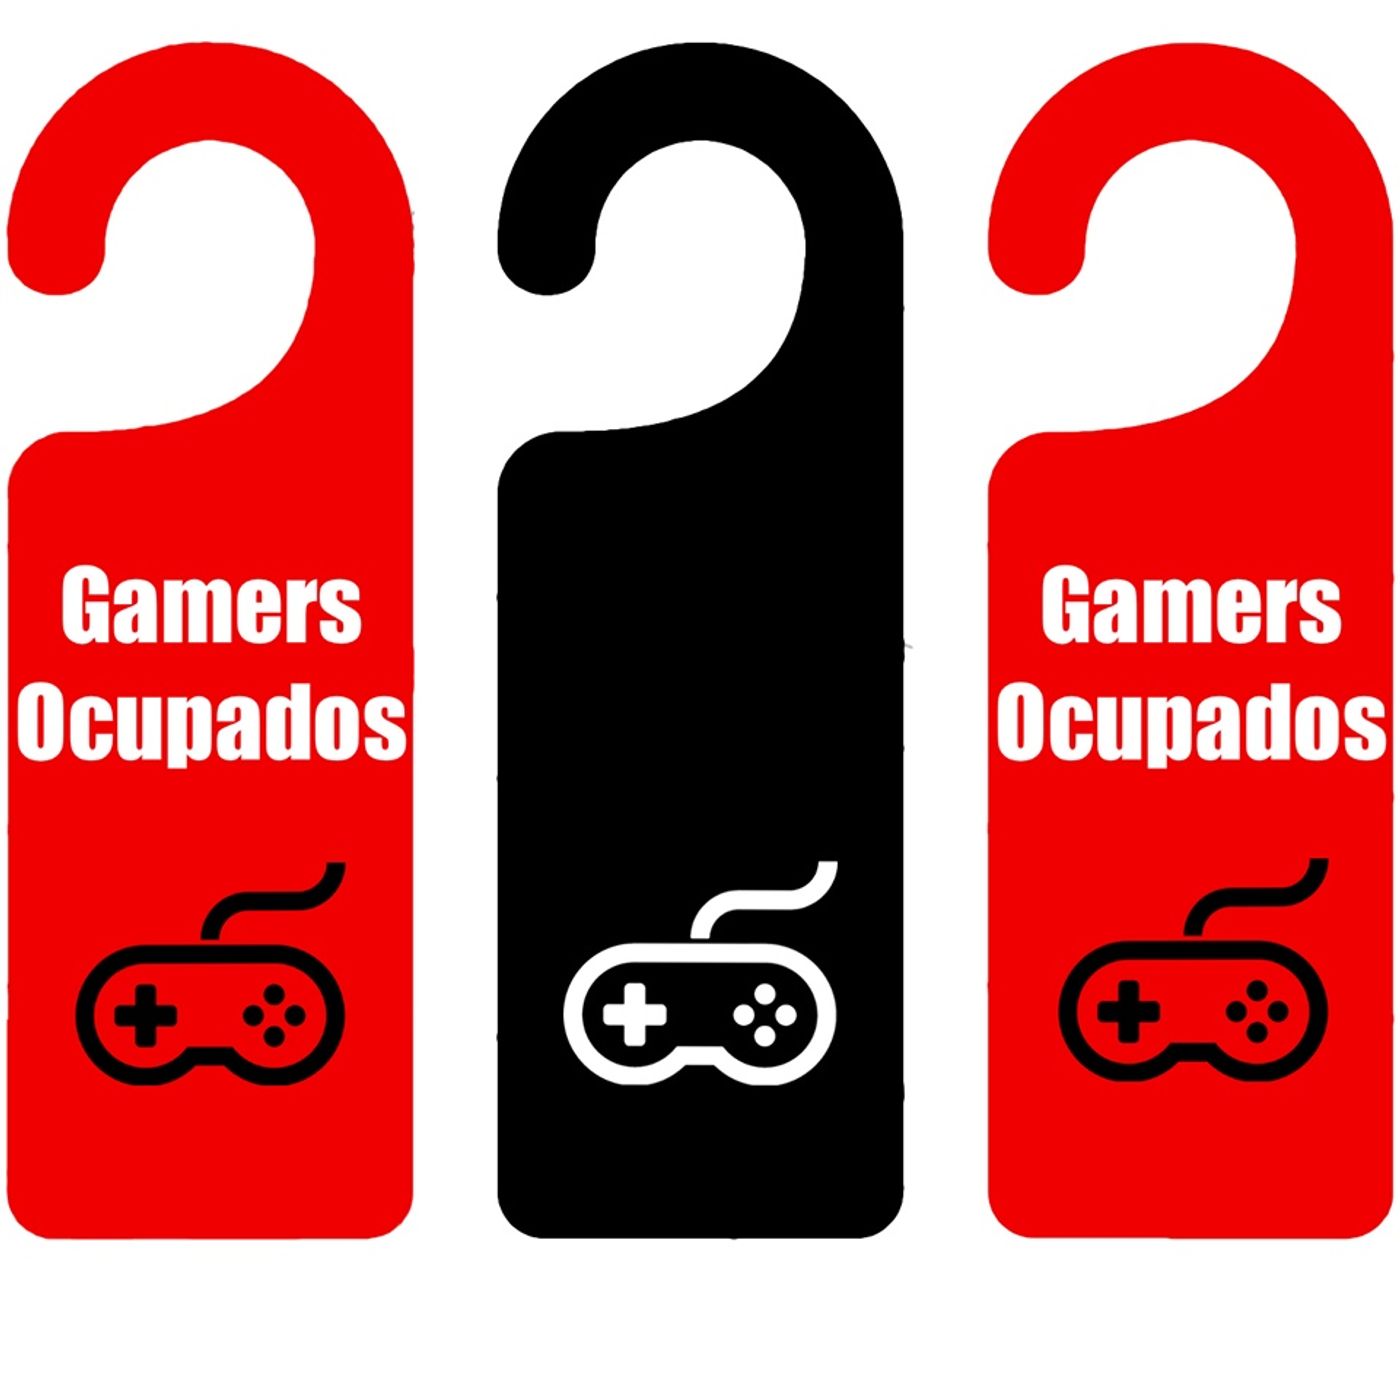 Gamers Ocupados